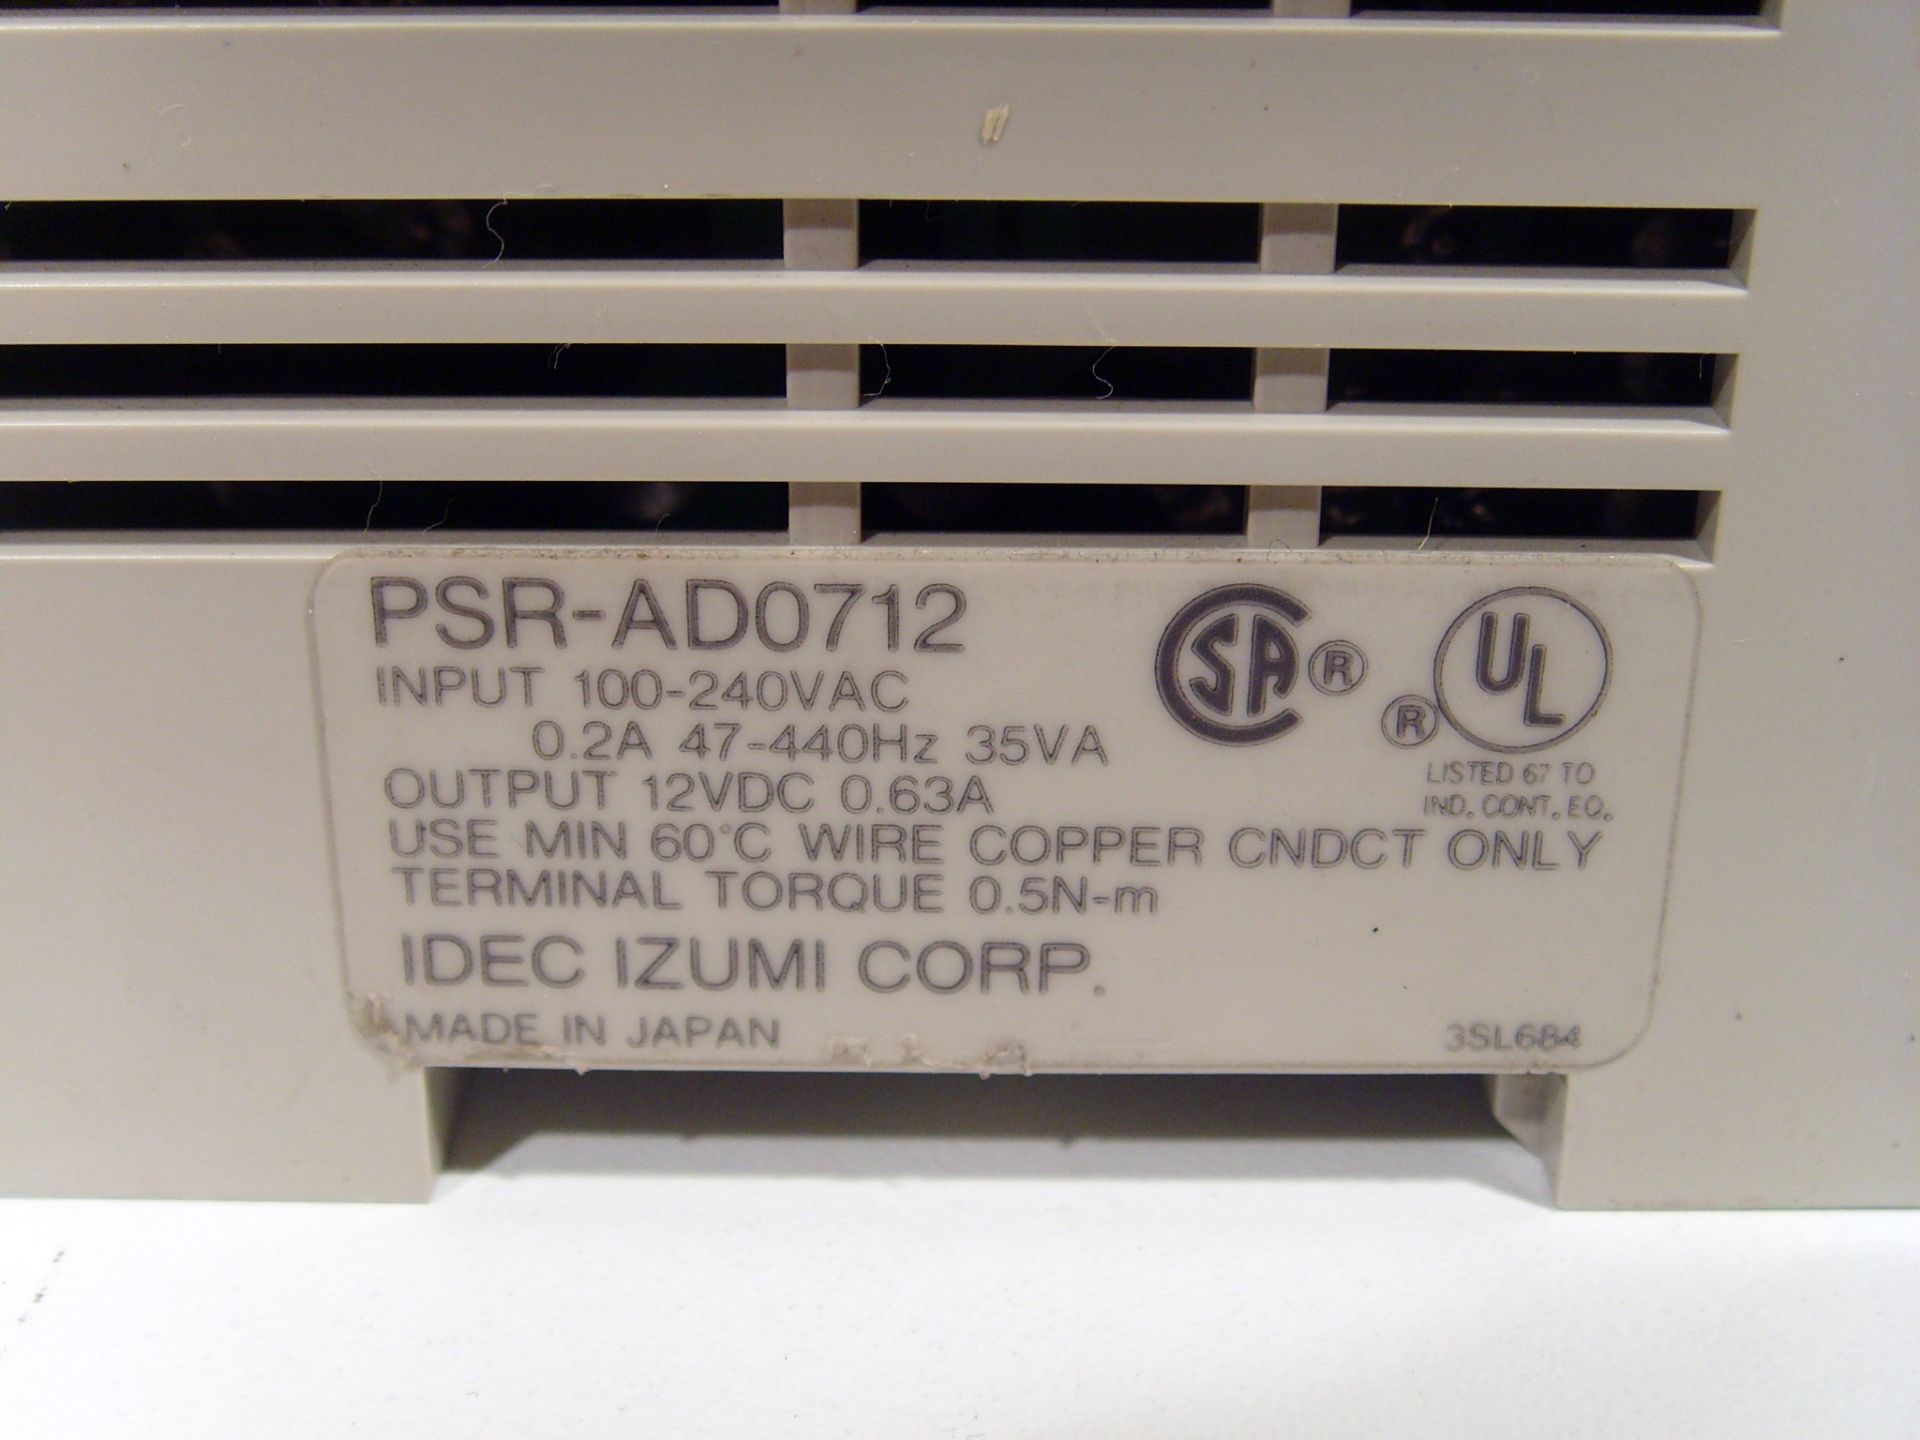 Idec PSR-AD0712 Power Supply, 12VDC/.63A - Image 3 of 3